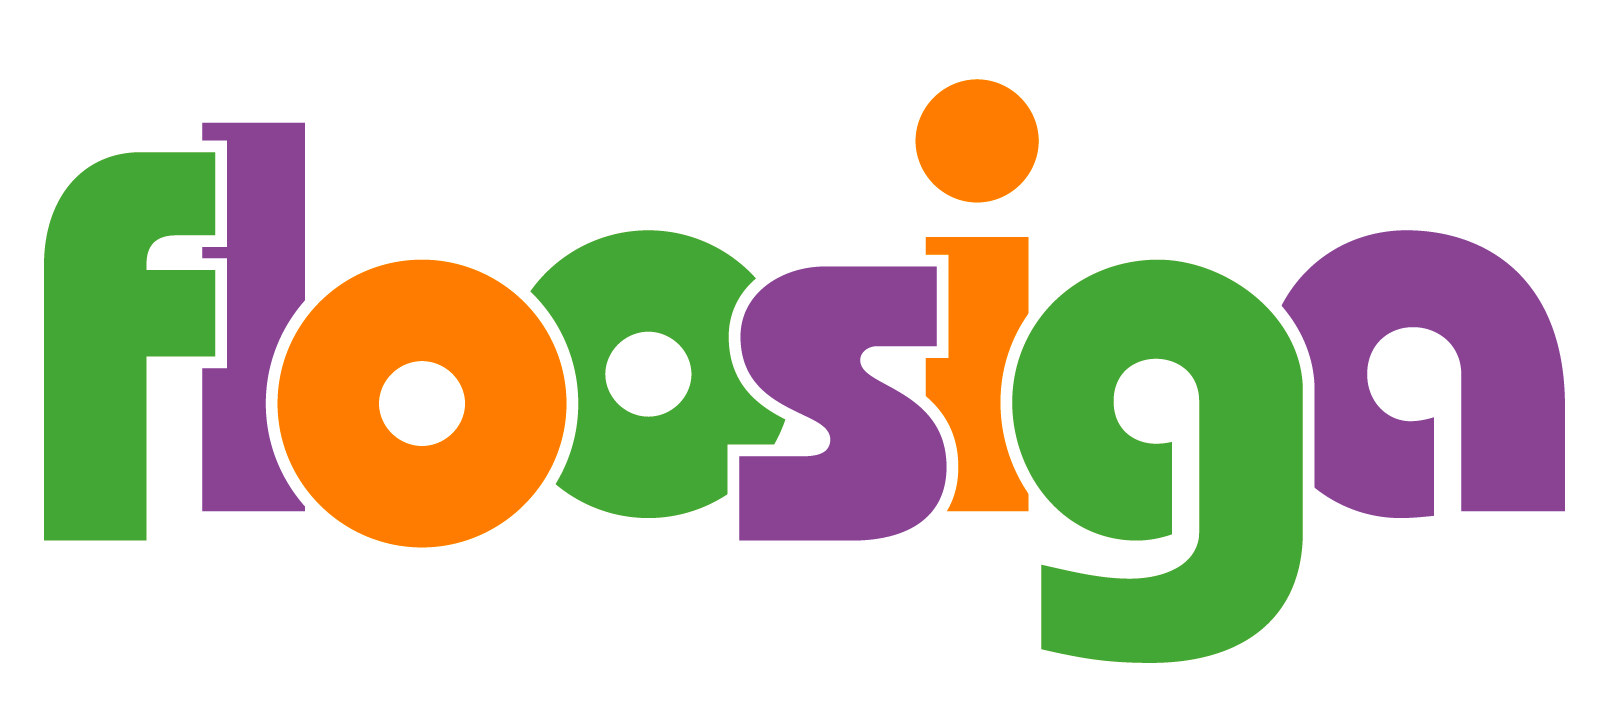 3 Color Logo - branding & logo design